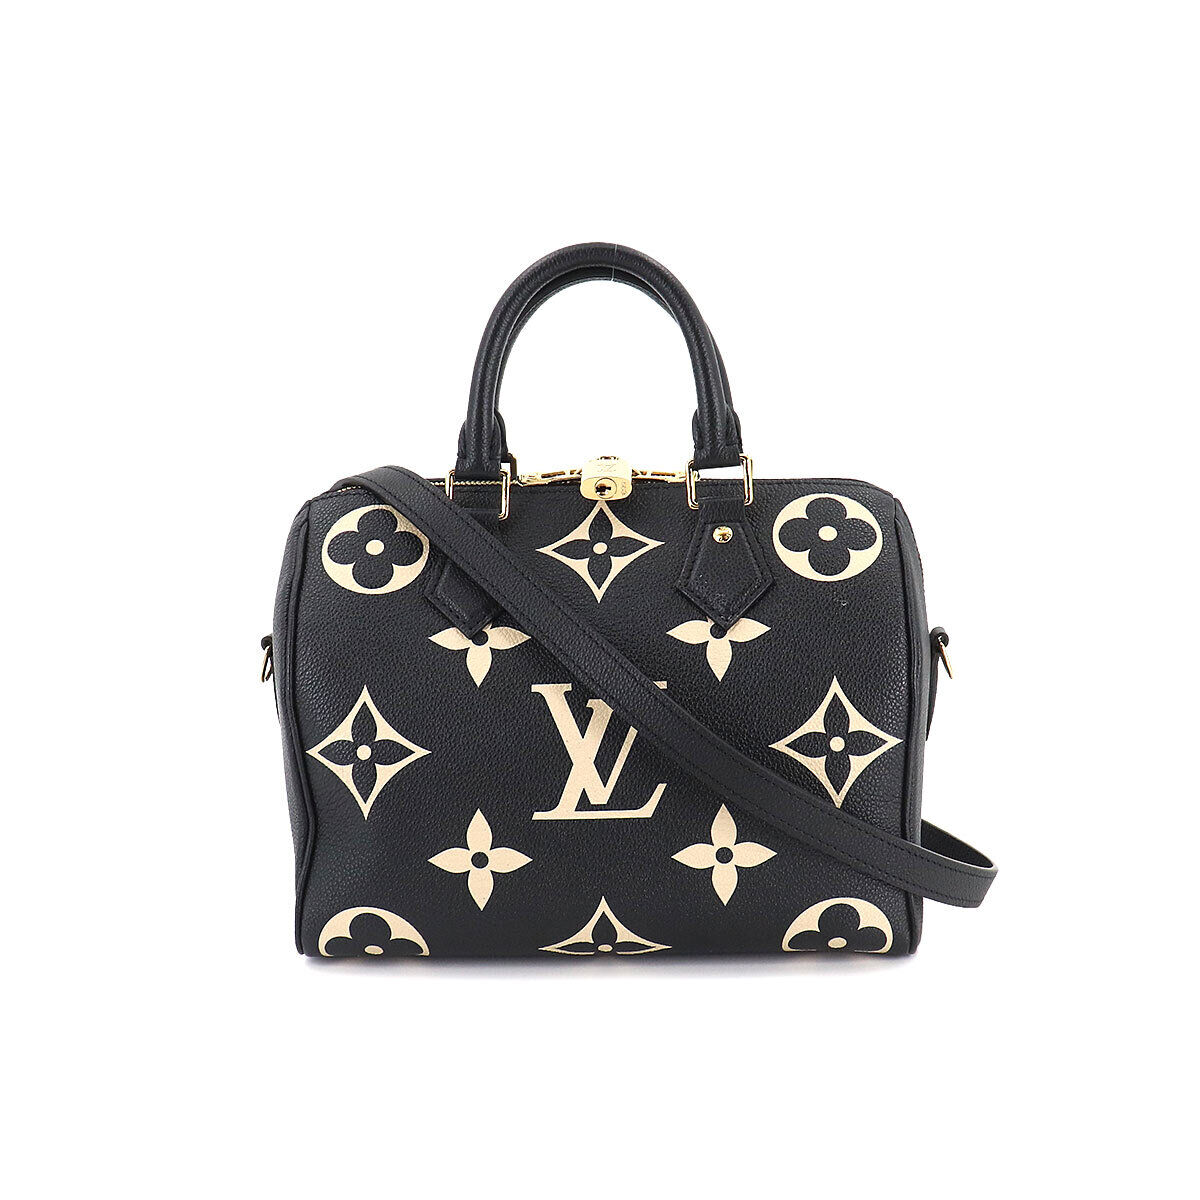 Shop Louis Vuitton SPEEDY Speedy Bandoulière 25 (M58947) by